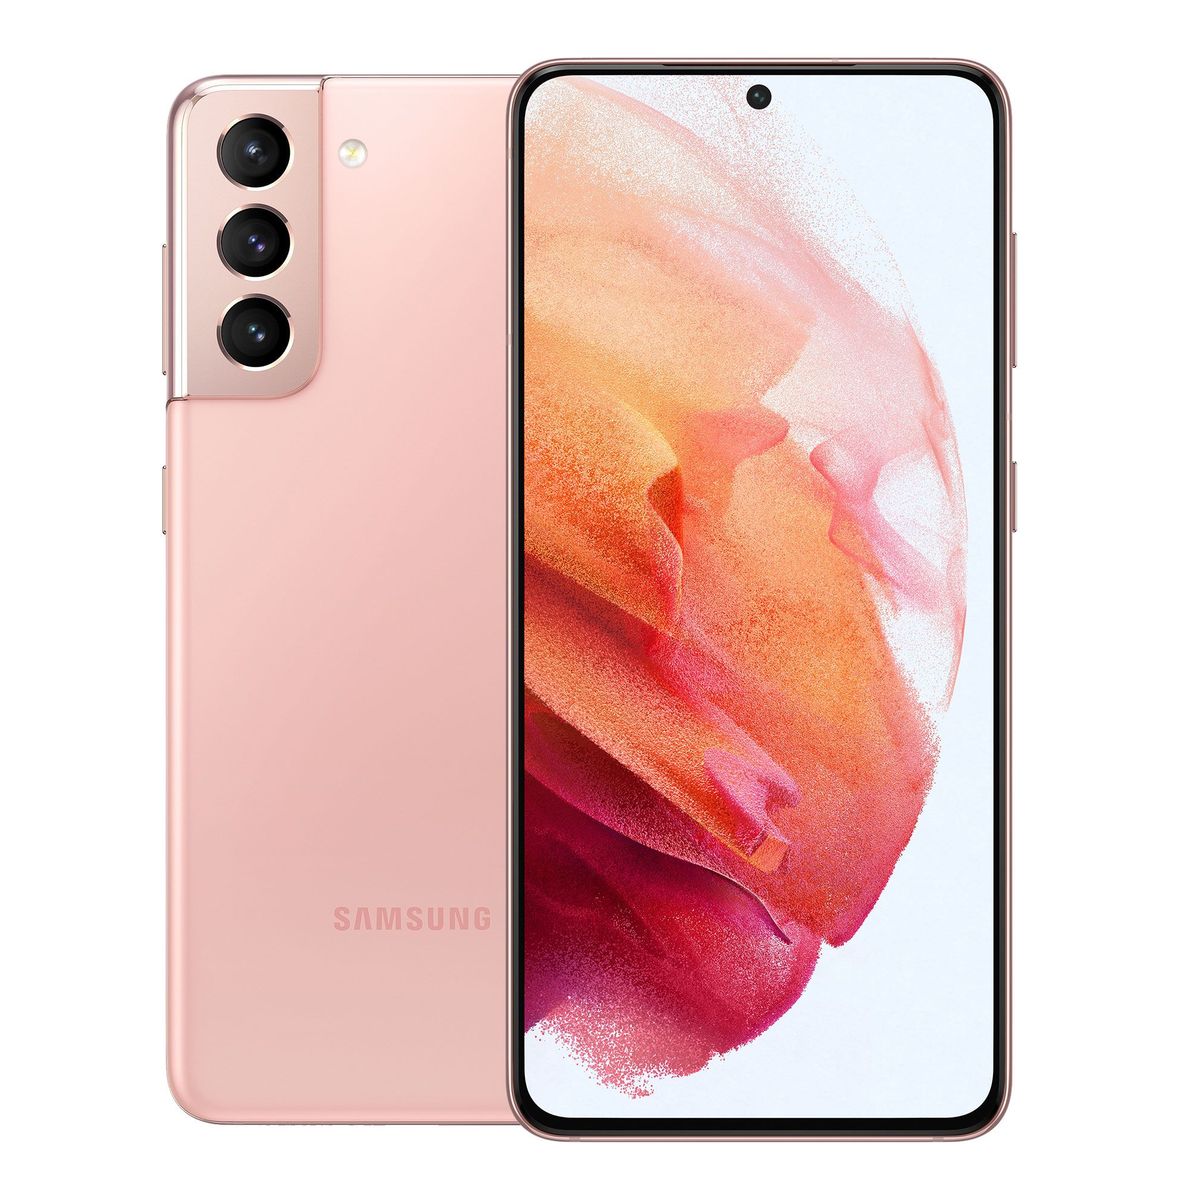 Samsung Galaxy S21 Smartphone 5G 256GB/8GB Phantom Pink